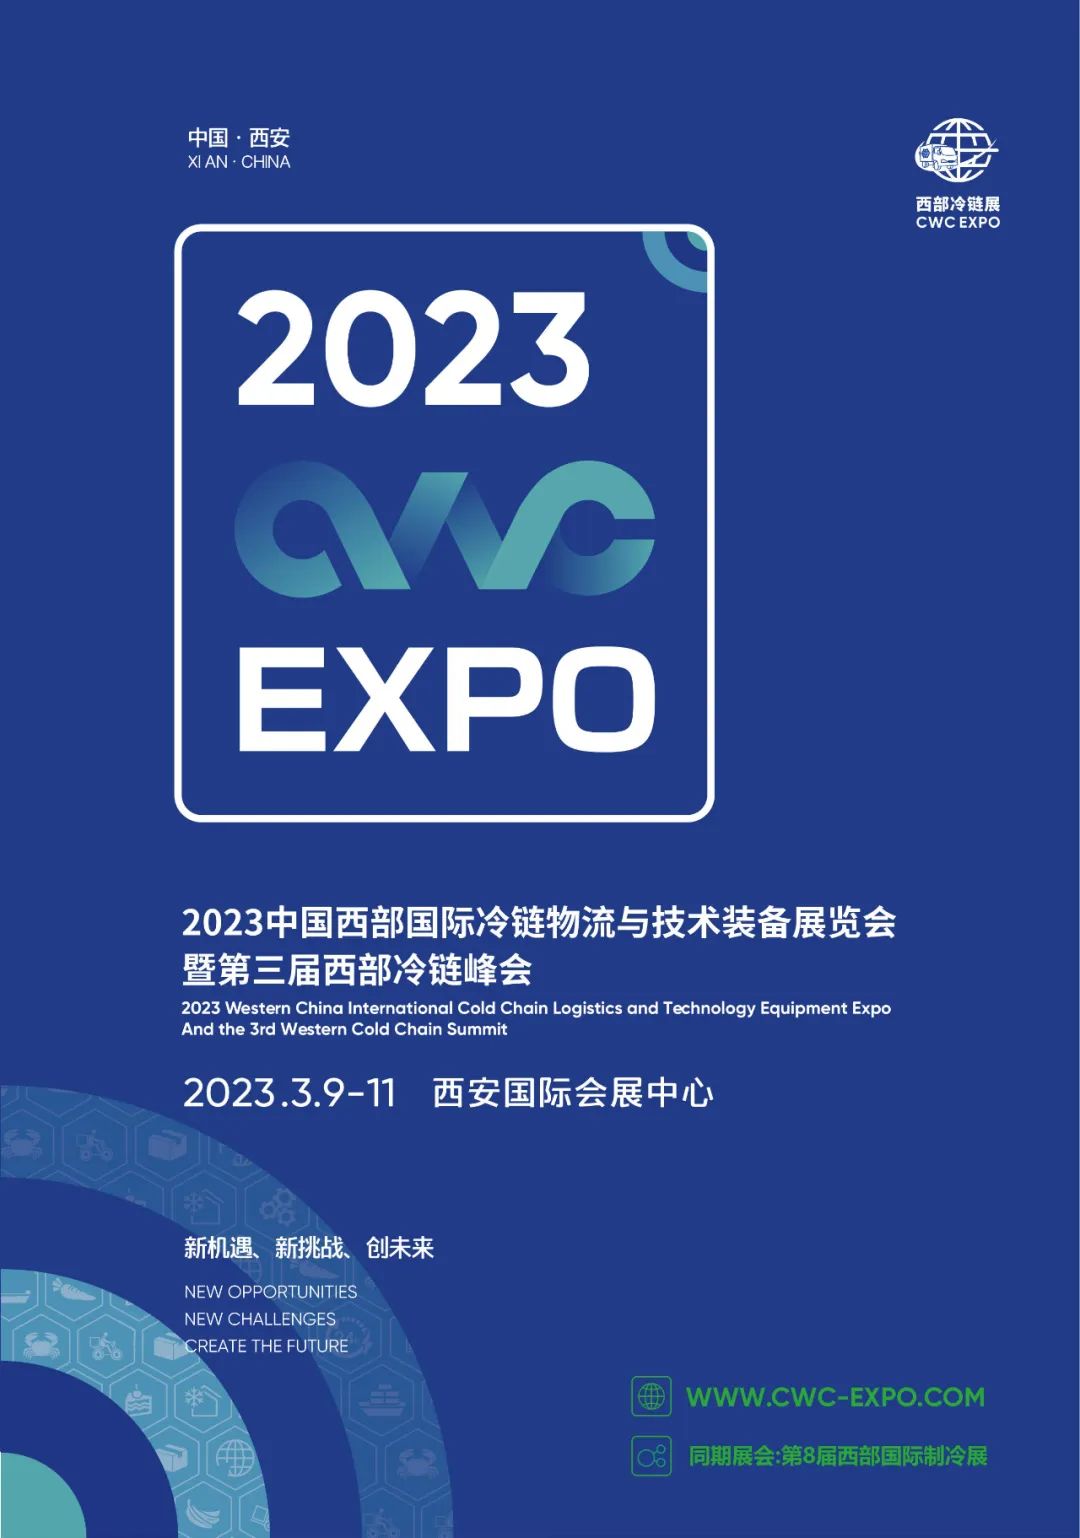 ​2023 Western China International Cold Chain Logistics